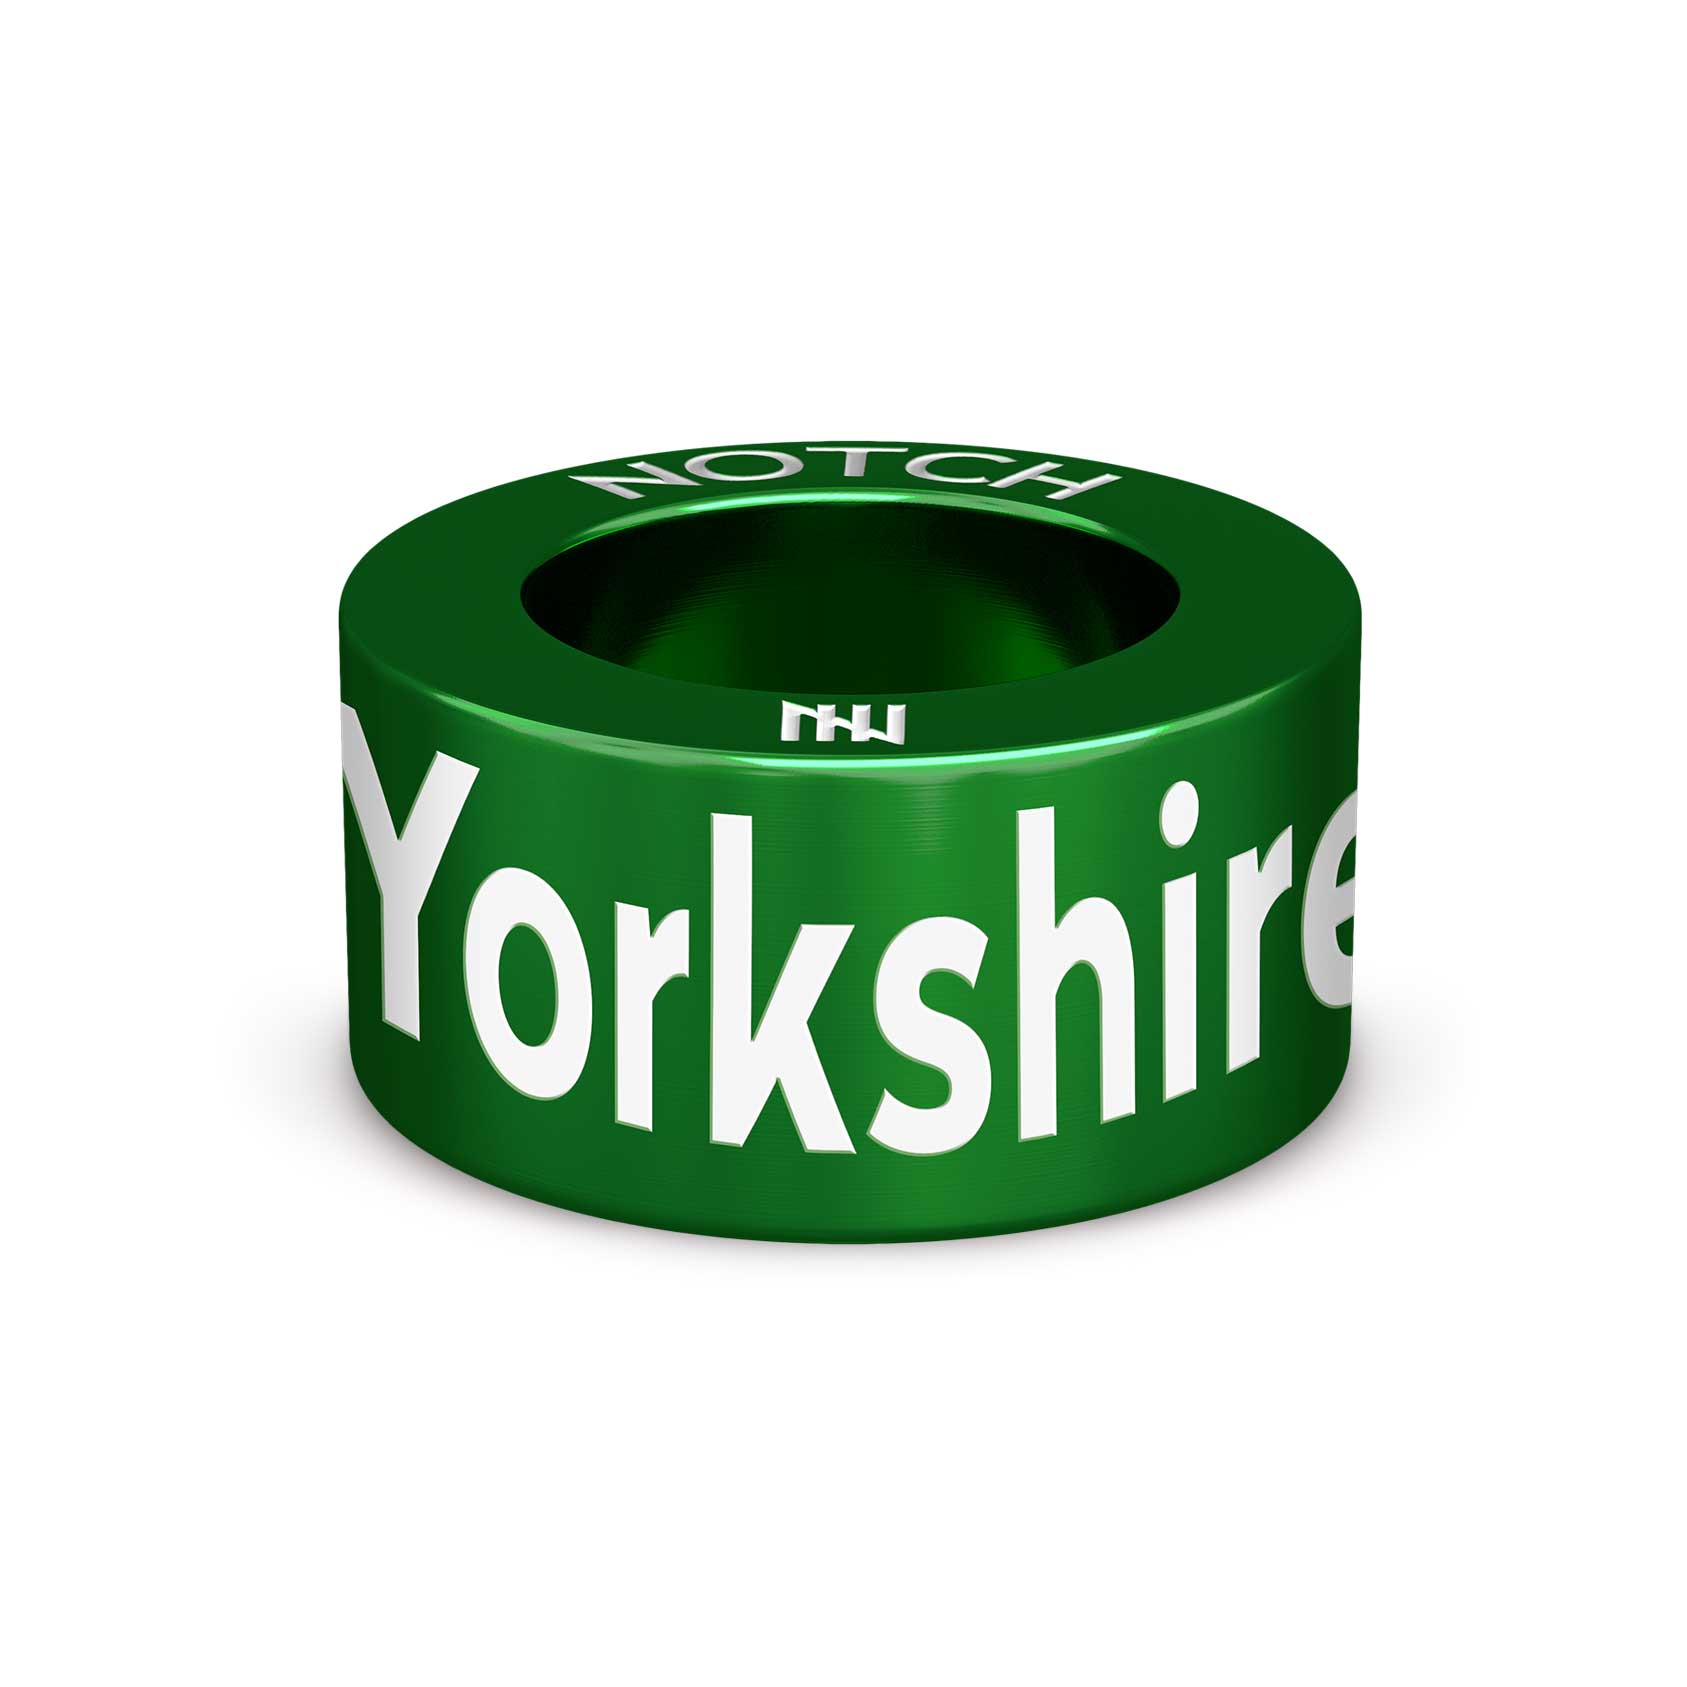 Yorkshire Challenge NOTCH Charm